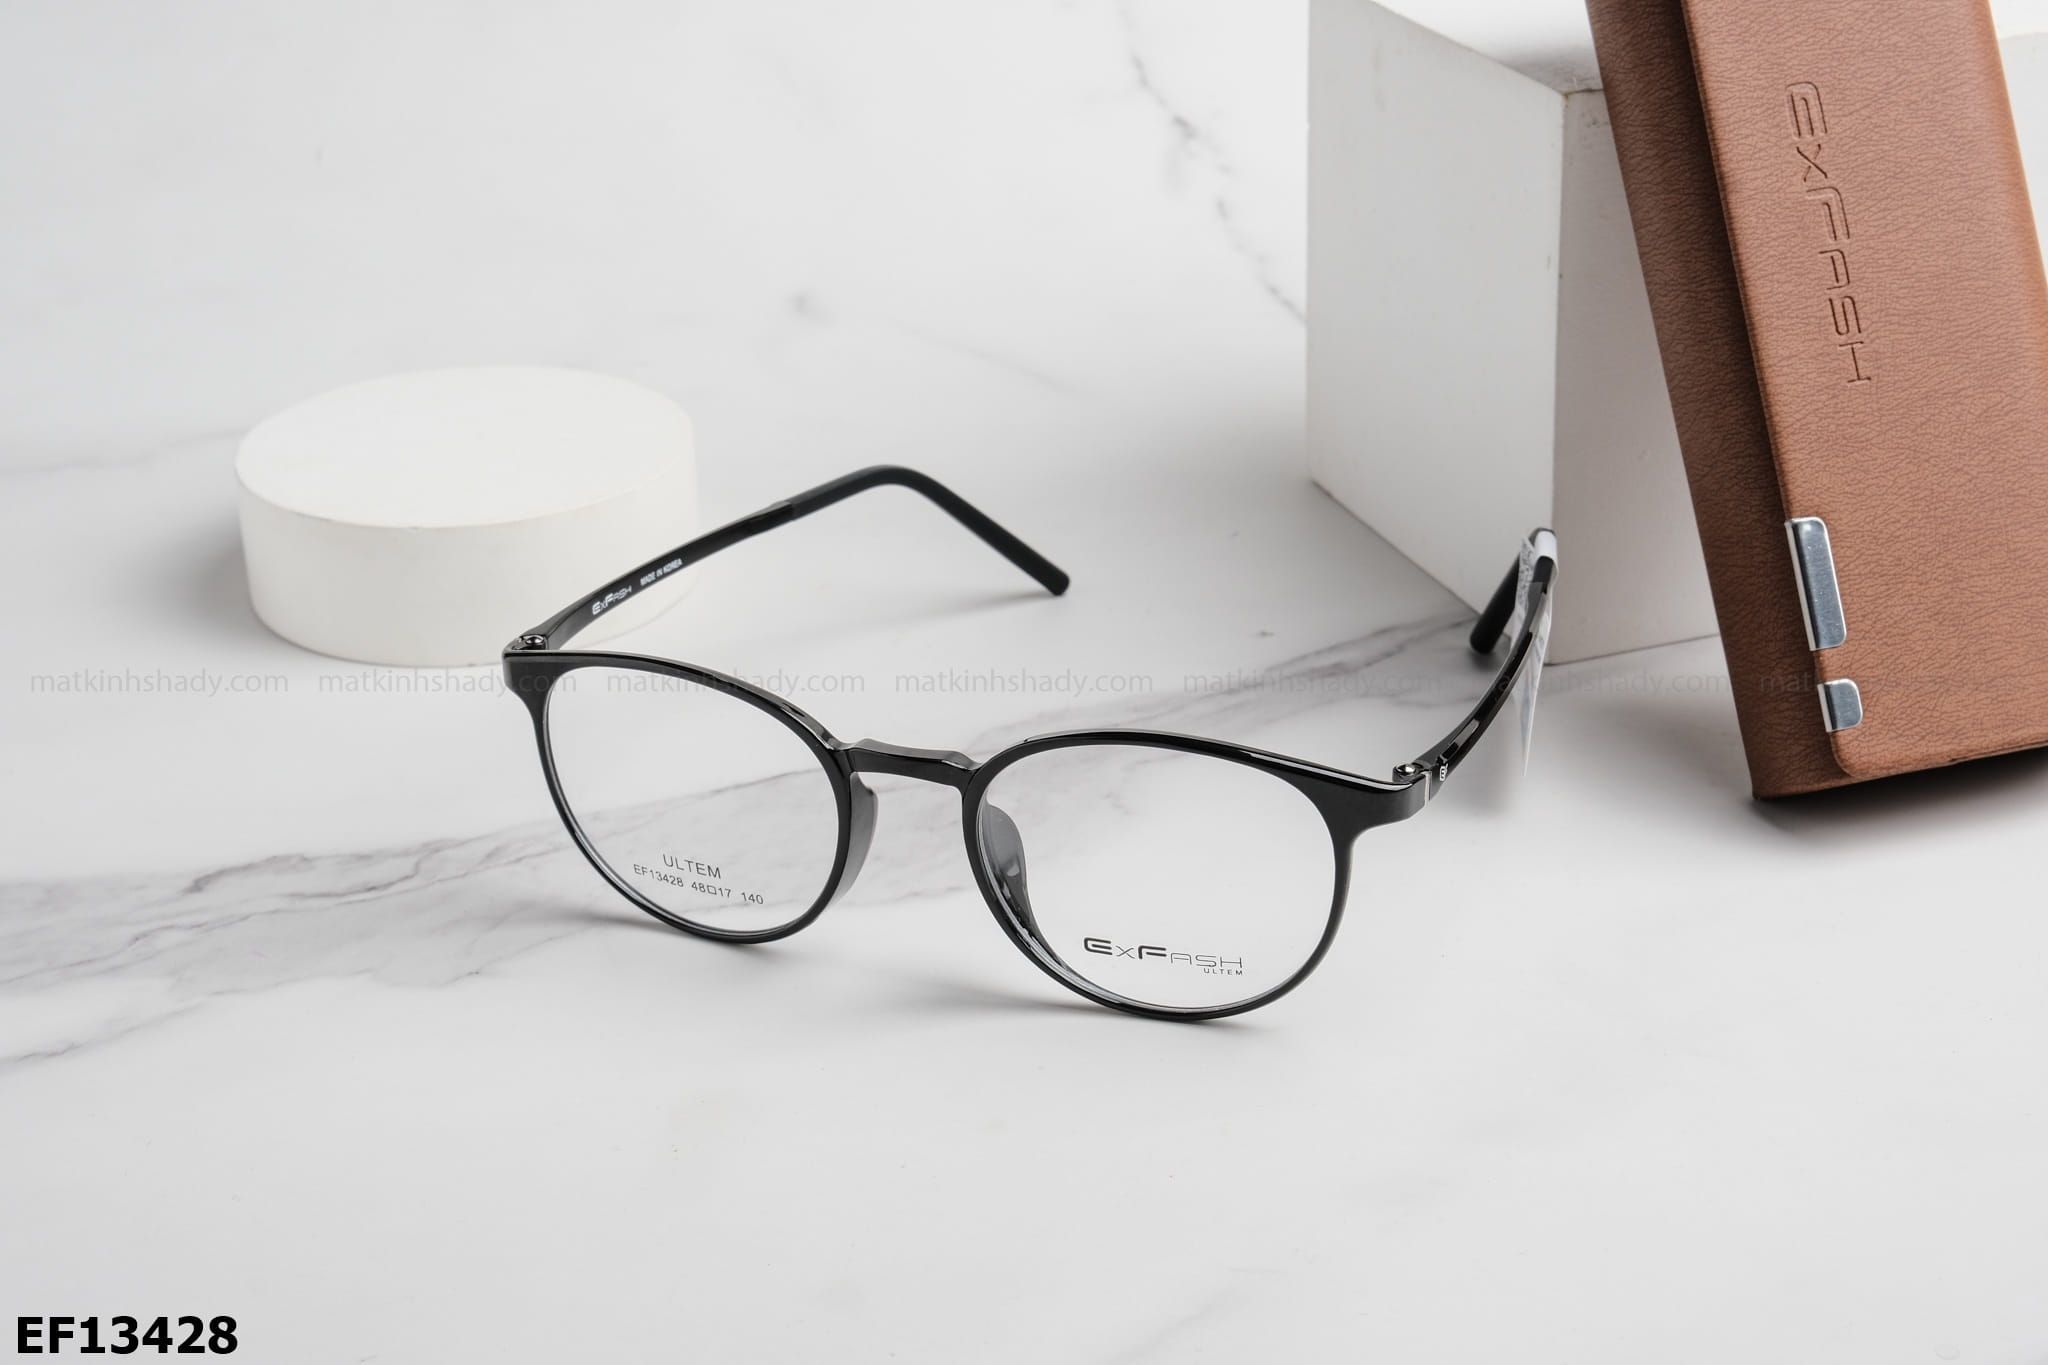  Exfash Eyewear - Glasses - EF13428 